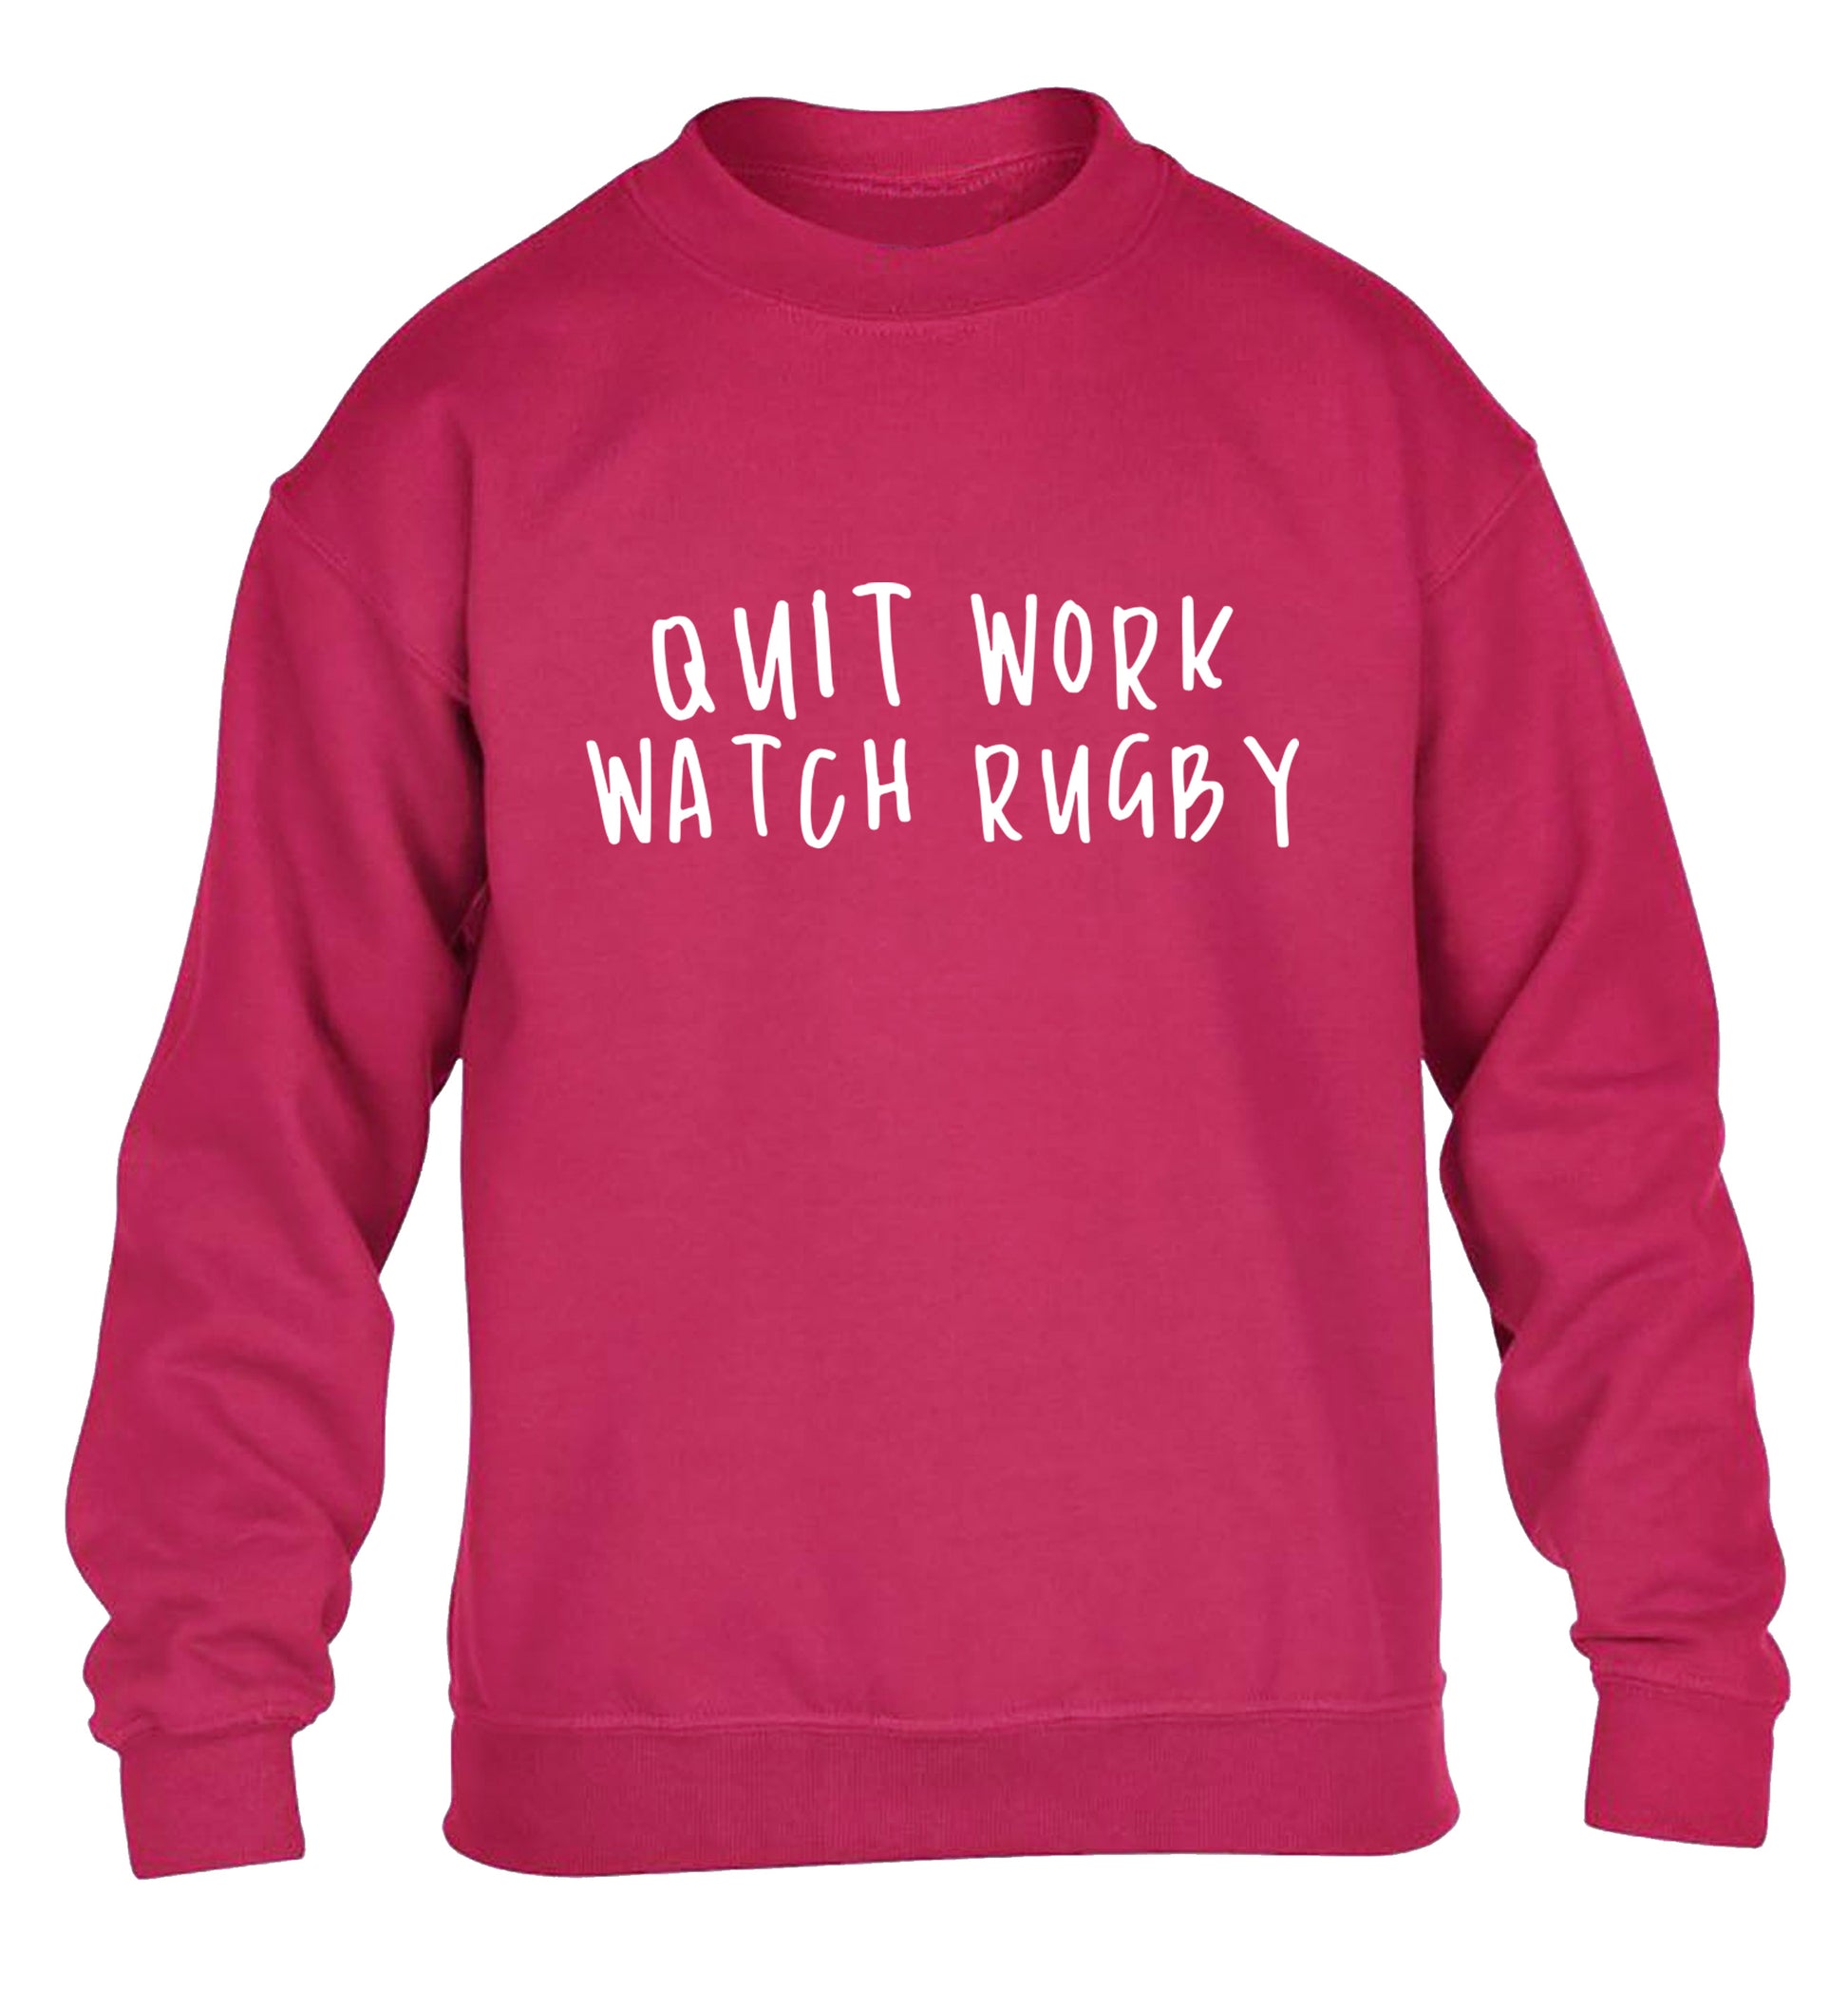 Quit work watch rugby children's pink sweater 12-13 Years